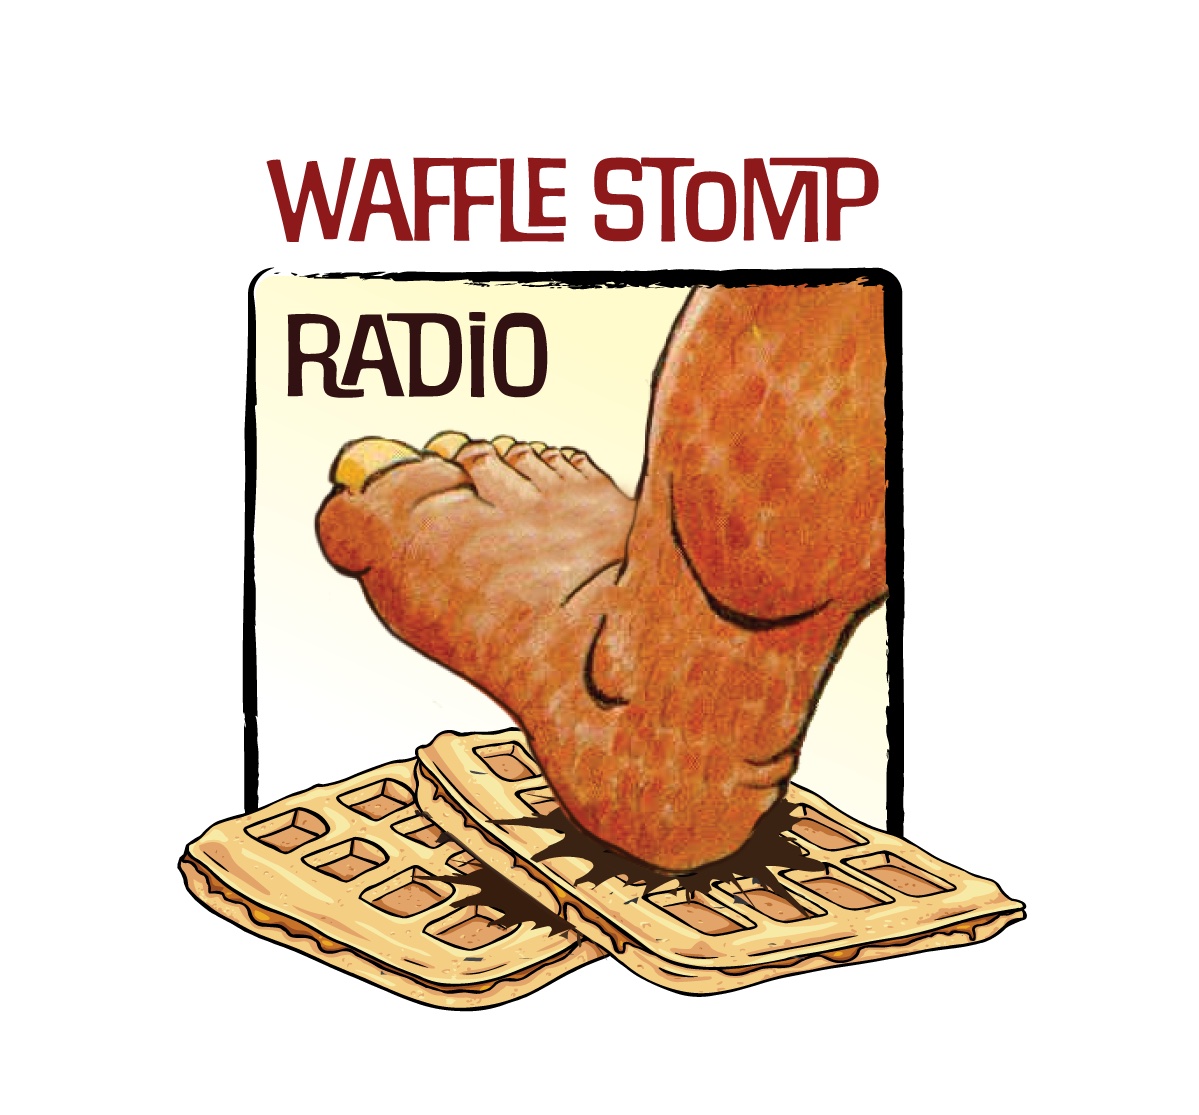 Waffle Stomp Radio cover